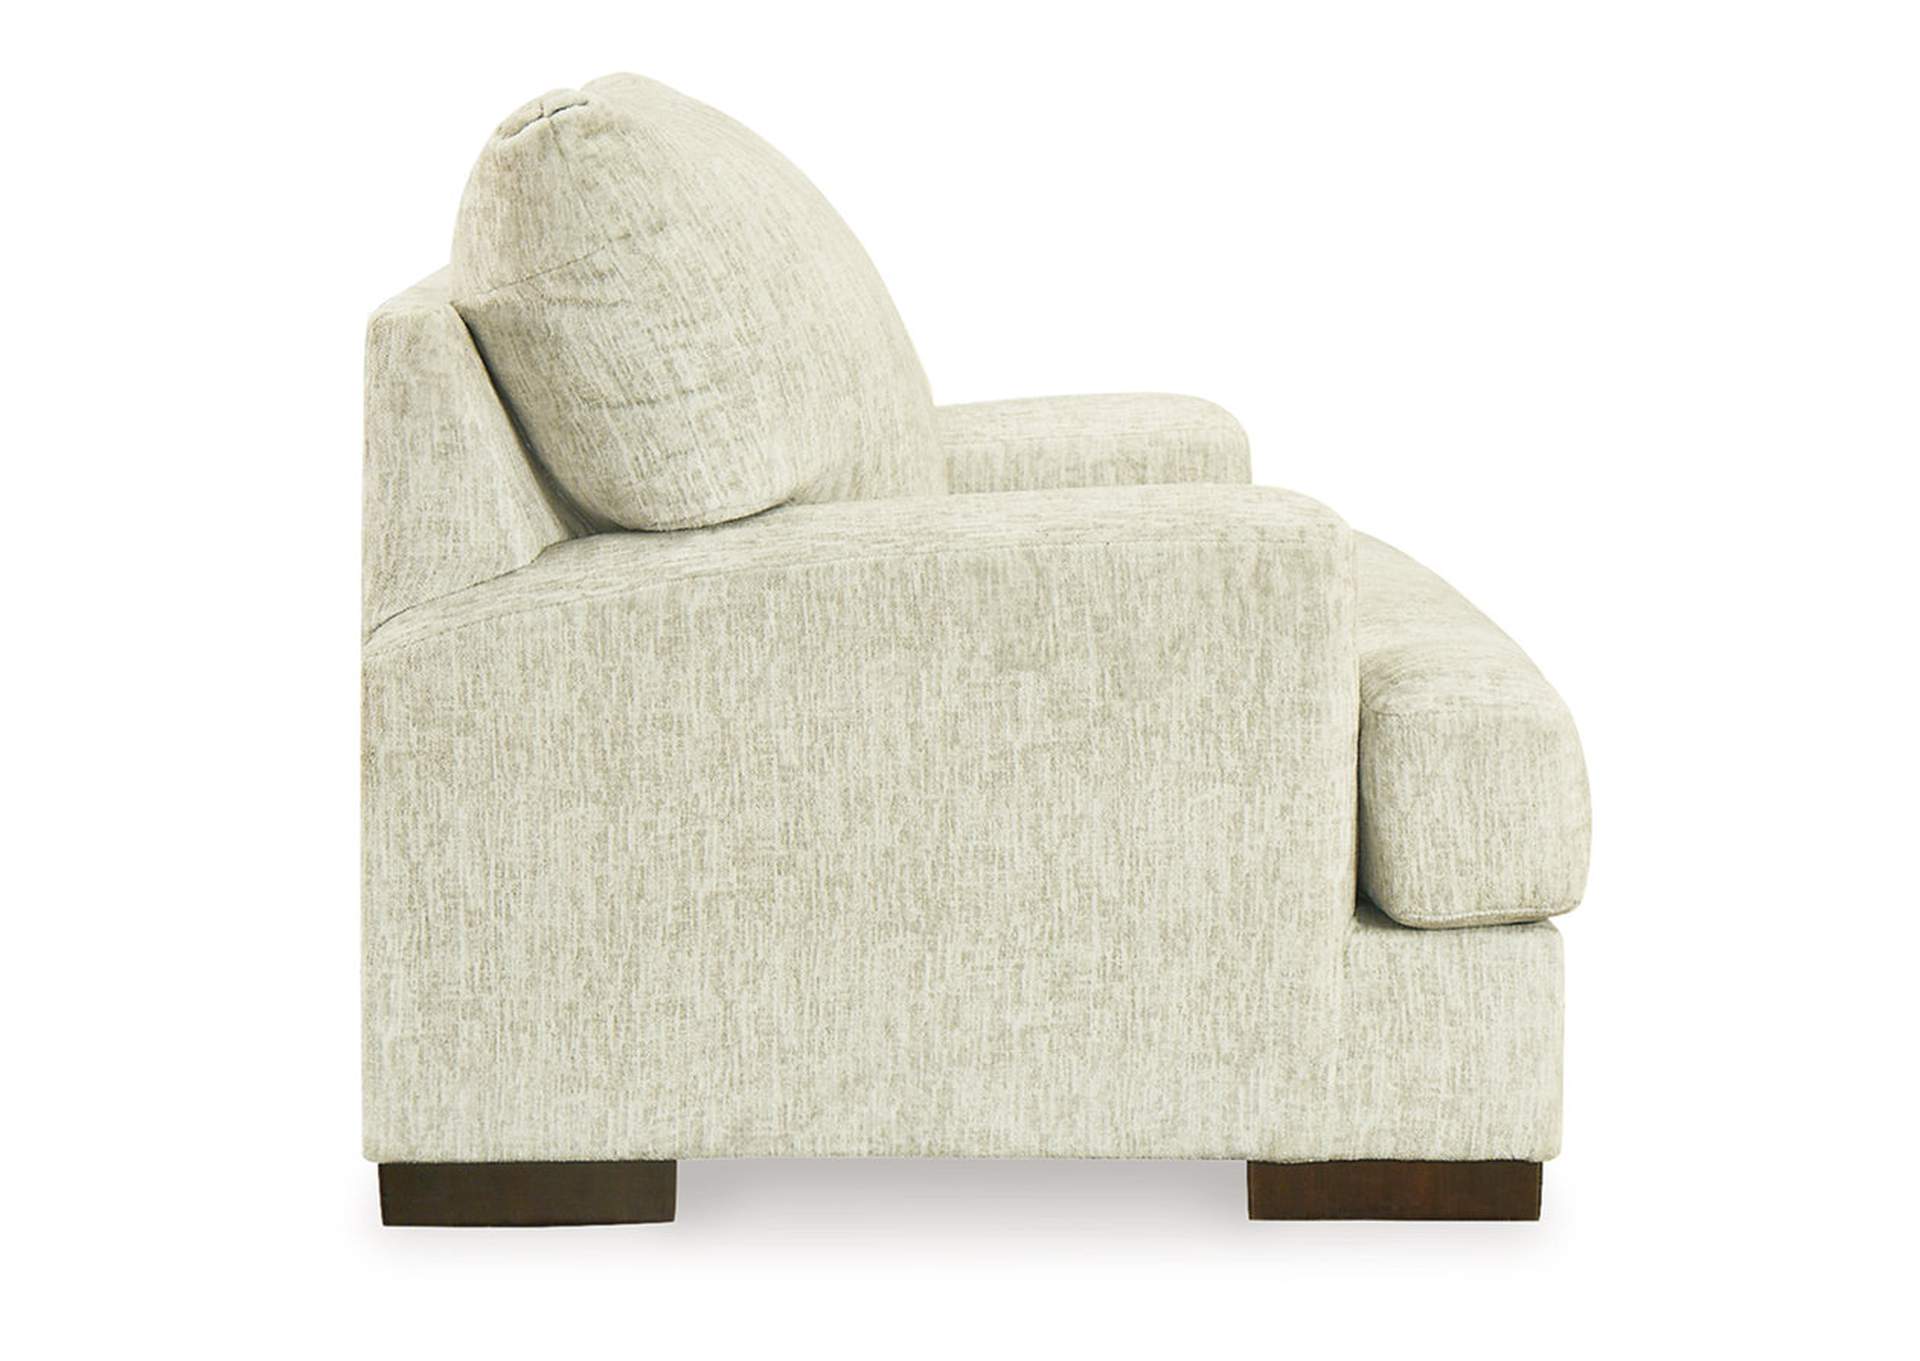 Caretti Sofa, Loveseat, Oversized Chair and Ottoman,Signature Design By Ashley